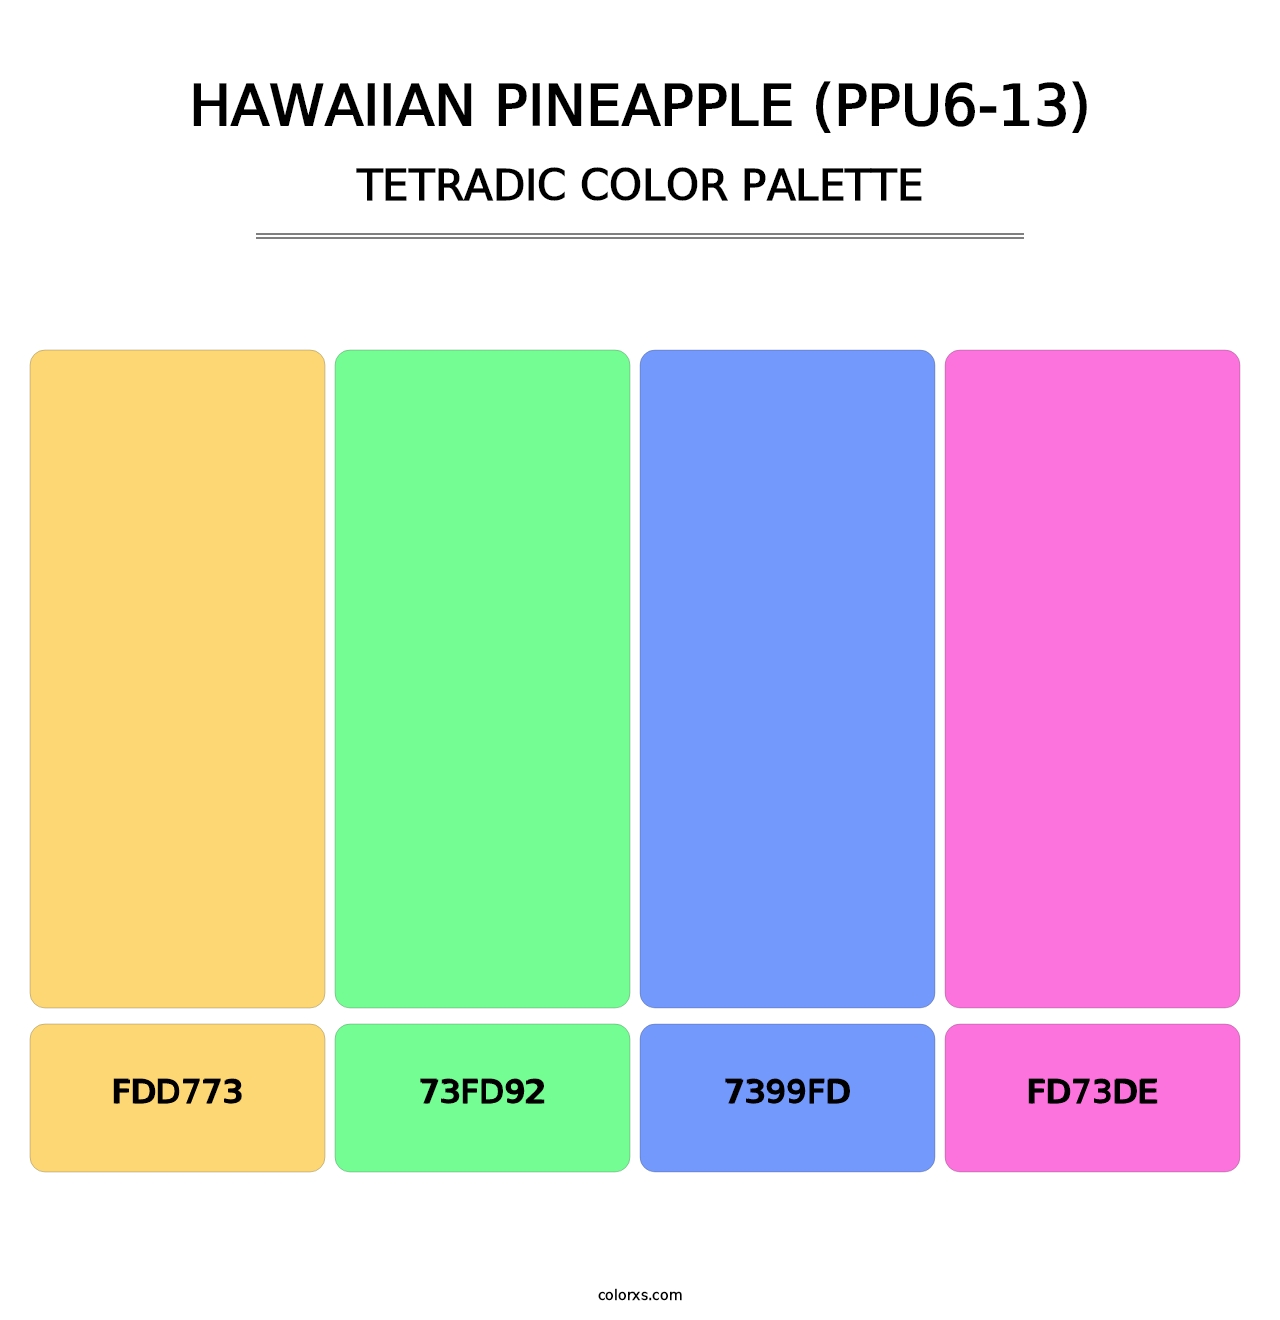 Hawaiian Pineapple (PPU6-13) - Tetradic Color Palette